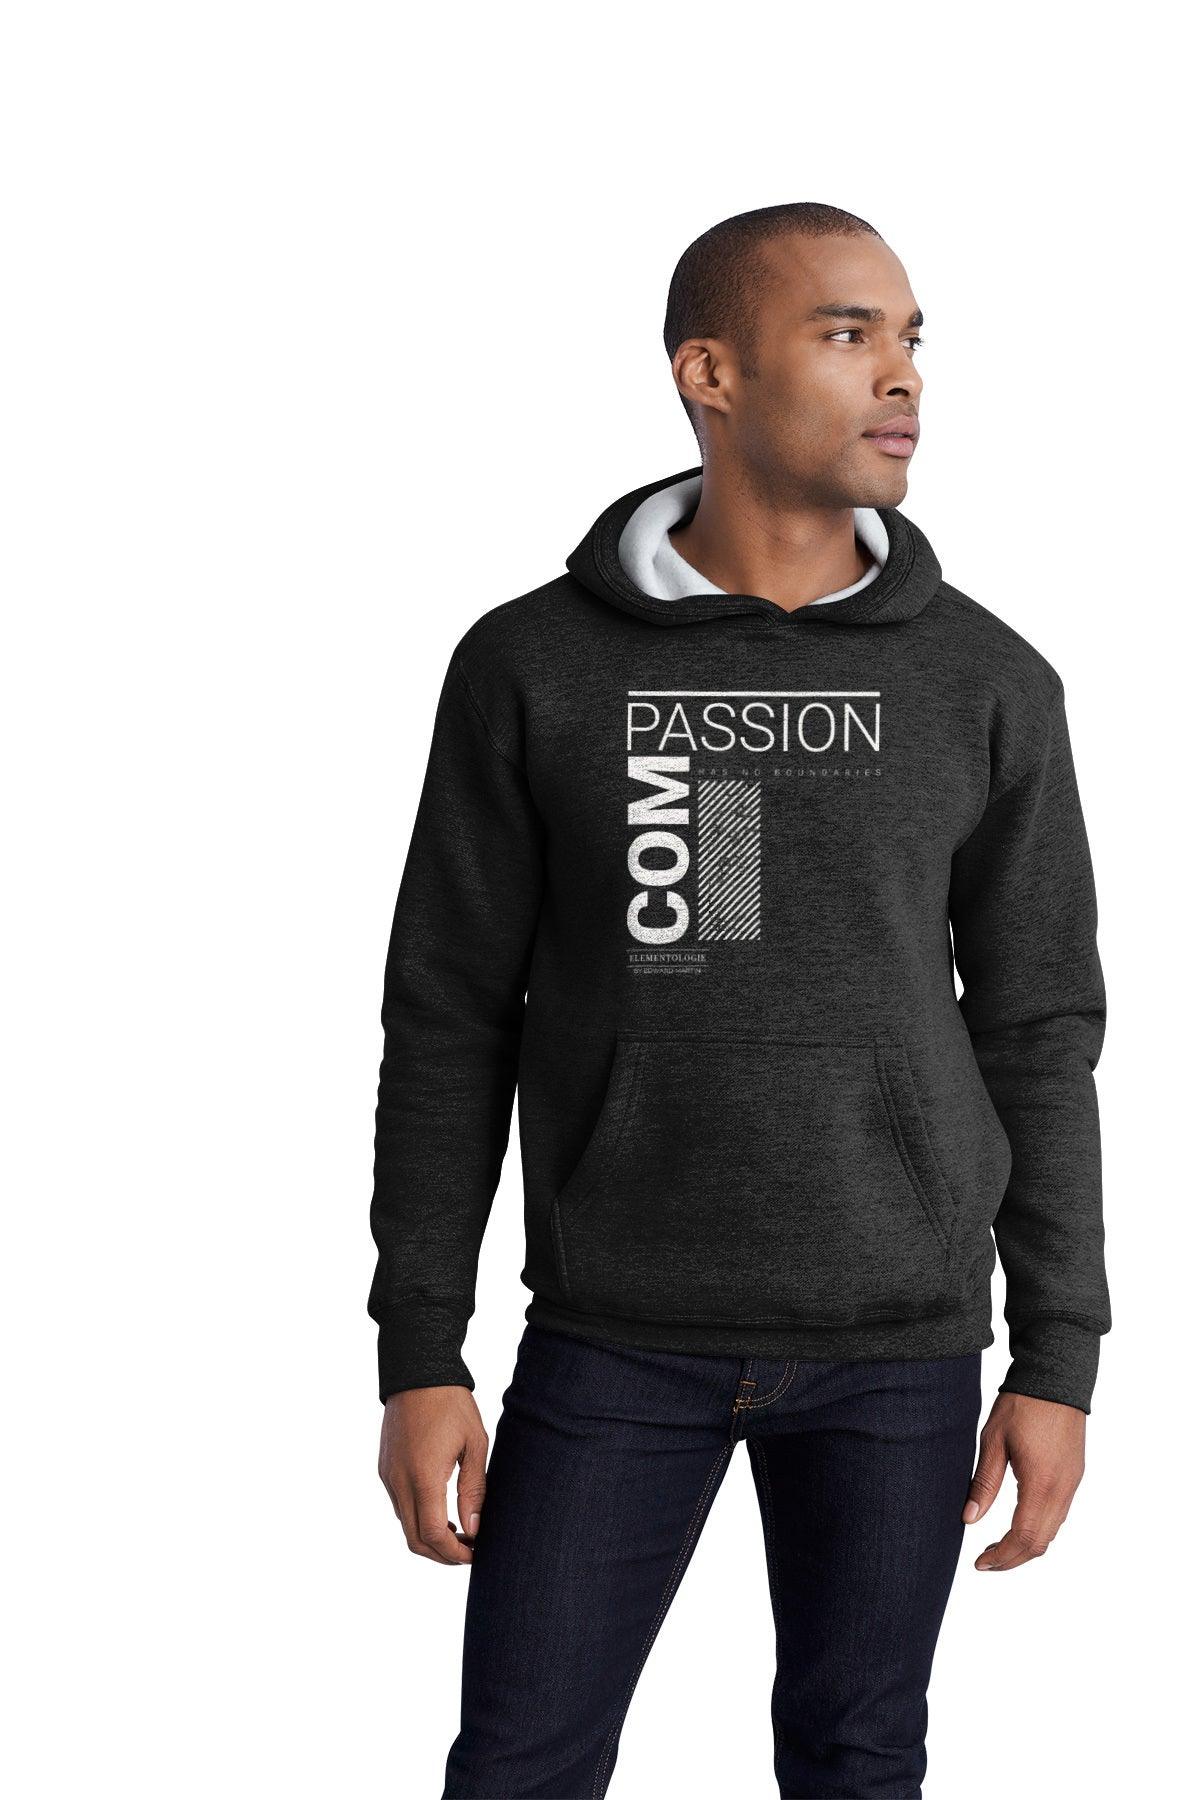 Unisex Premium Pullover Hoodie-Compassion Collection - Premium  from Elementologie - Just $58.99! Shop now at Elementologie